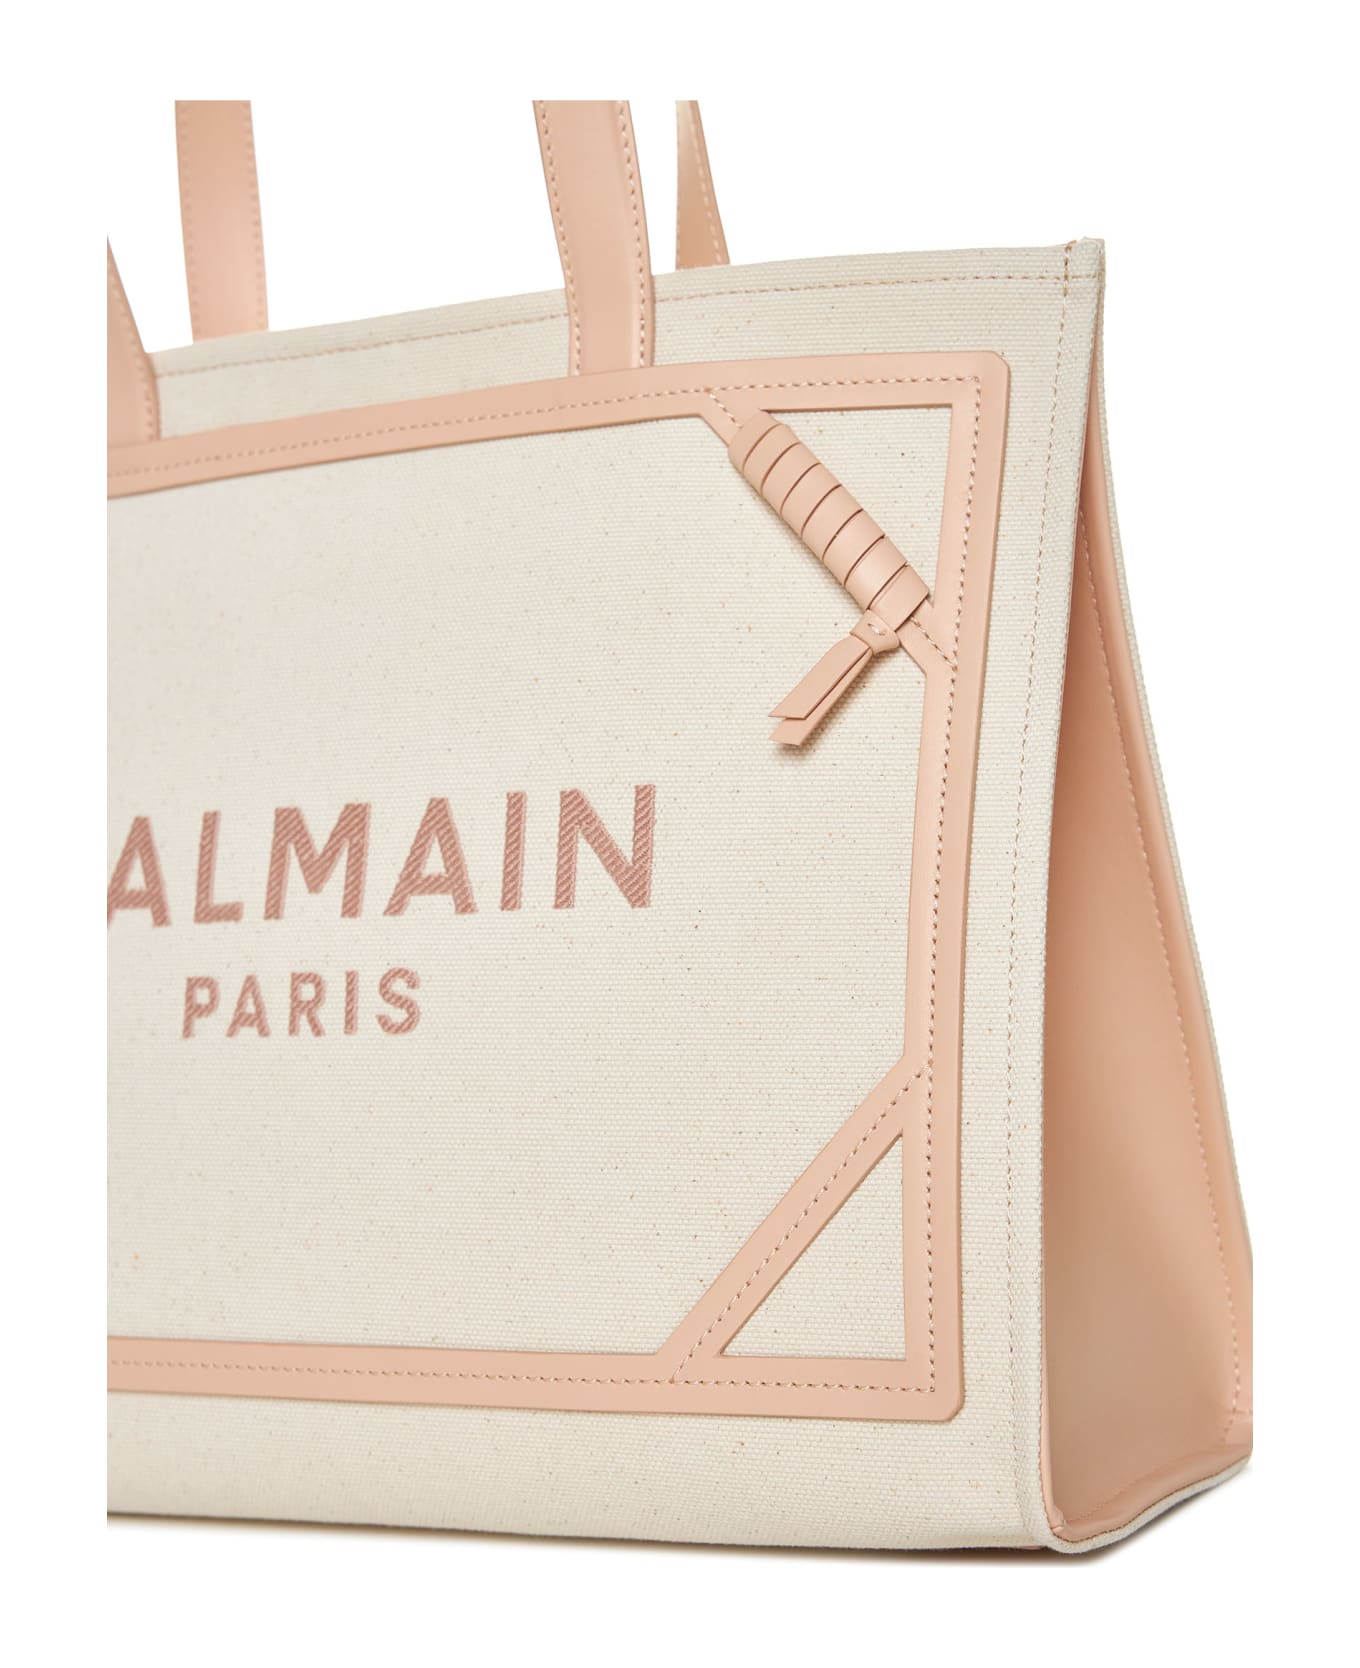 Balmain Shopping Bag - Creme/nude rosè